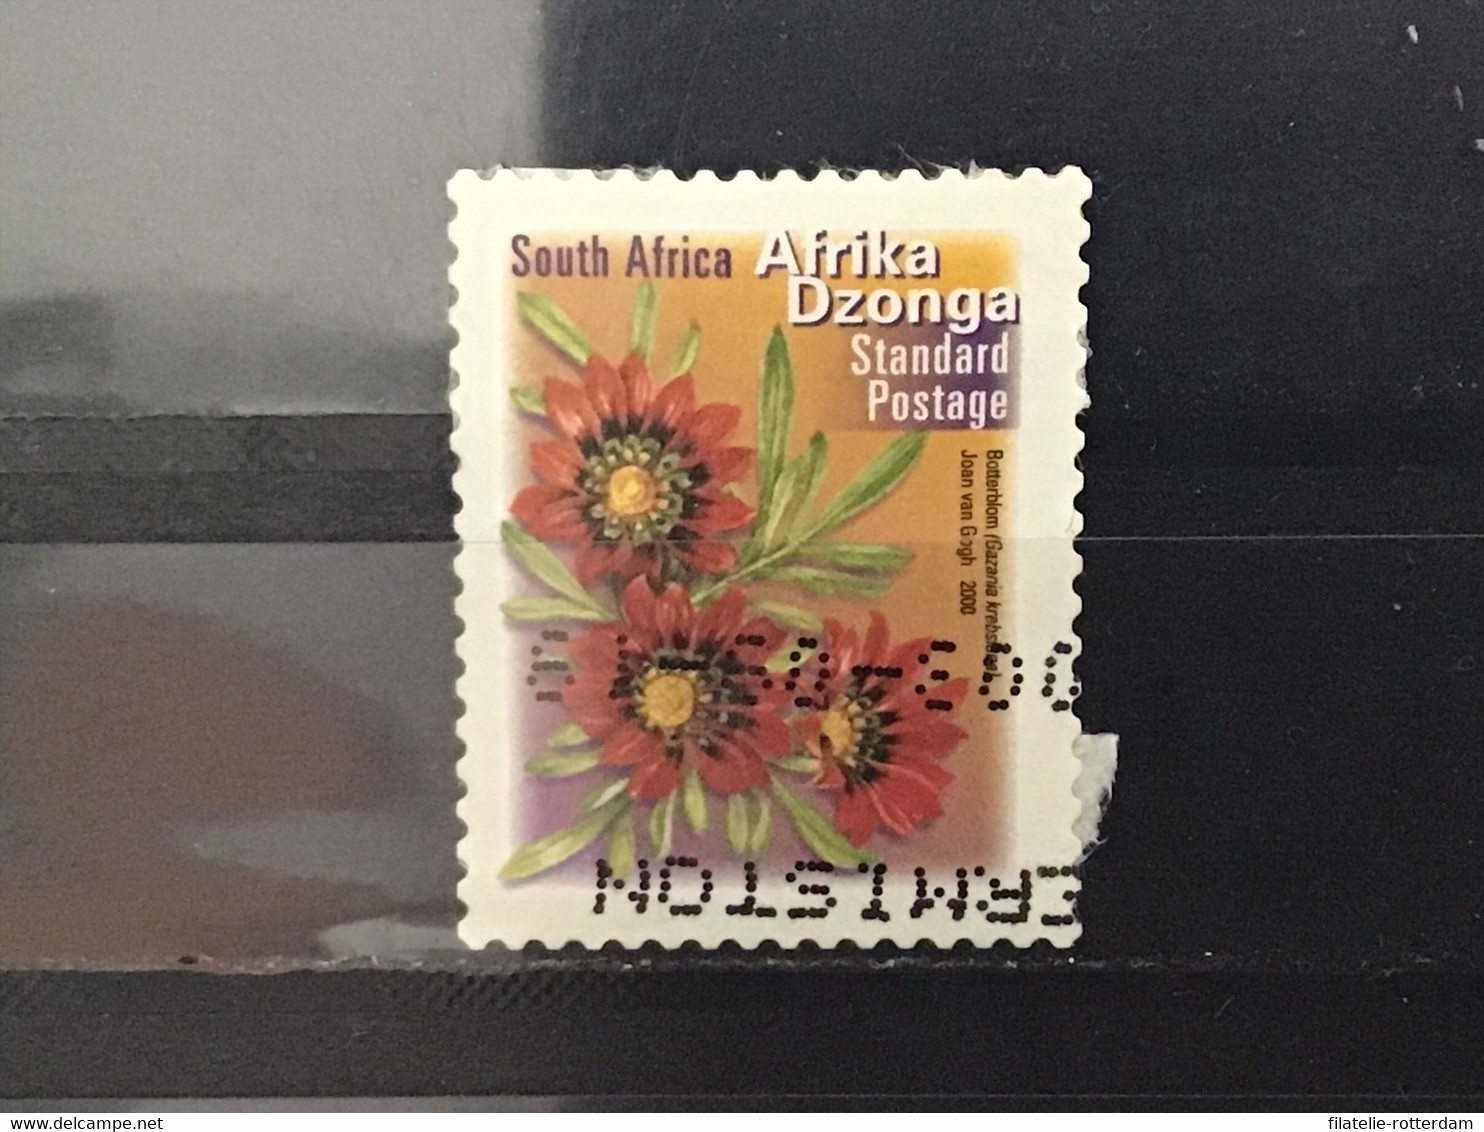 Zuid-Afrika / South Africa - Bloemen Dzonga 2001 - Used Stamps